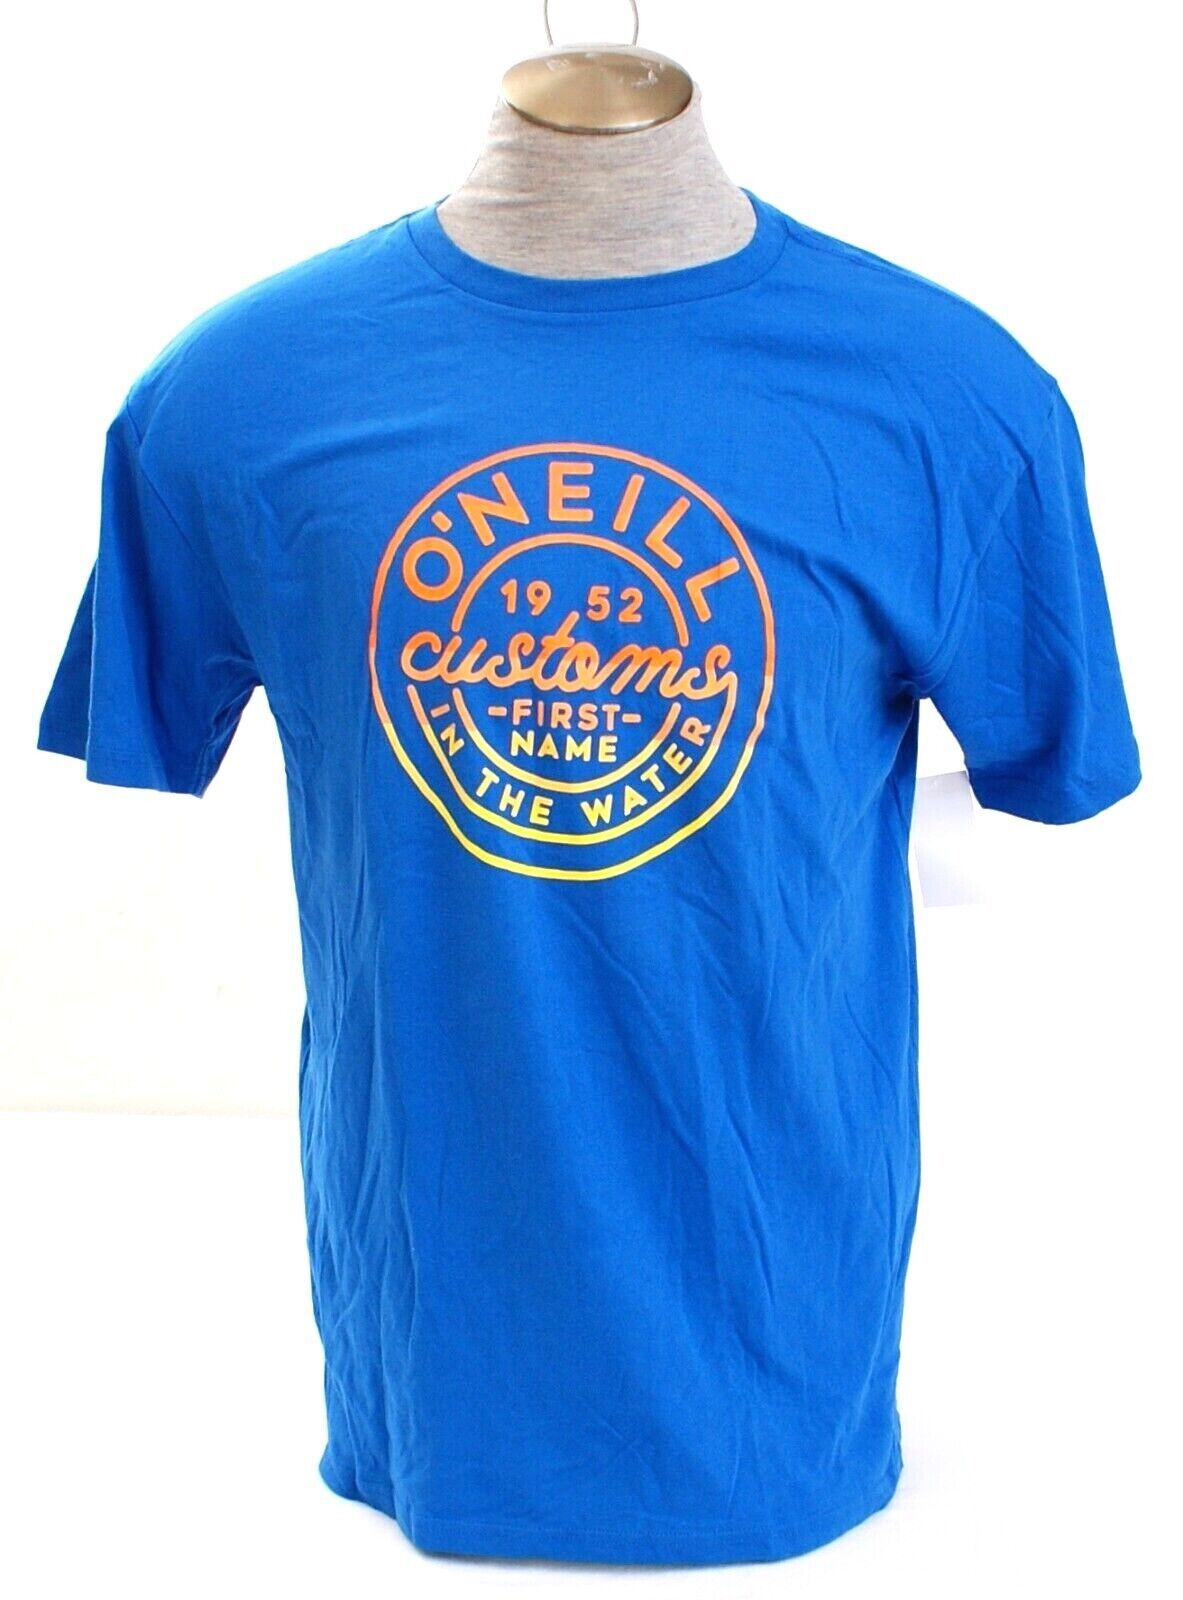 O'Neill Blue Graphic Blue Crew Neck Short Sleeve Tee T-Shirt Men's L NWT - $39.99